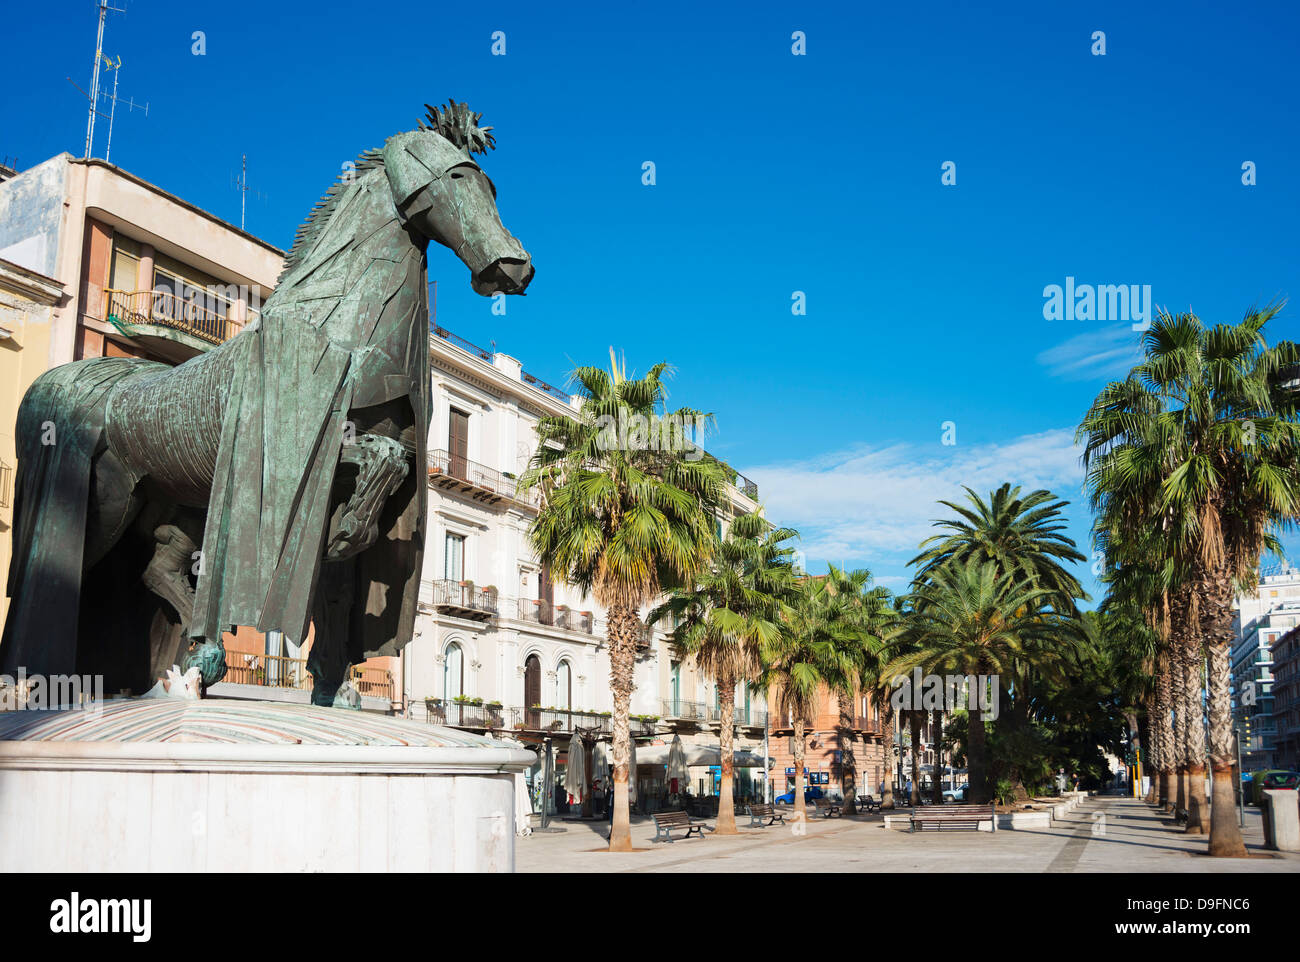 Horse sculpture, Bari, Puglia, Italy Stock Photo